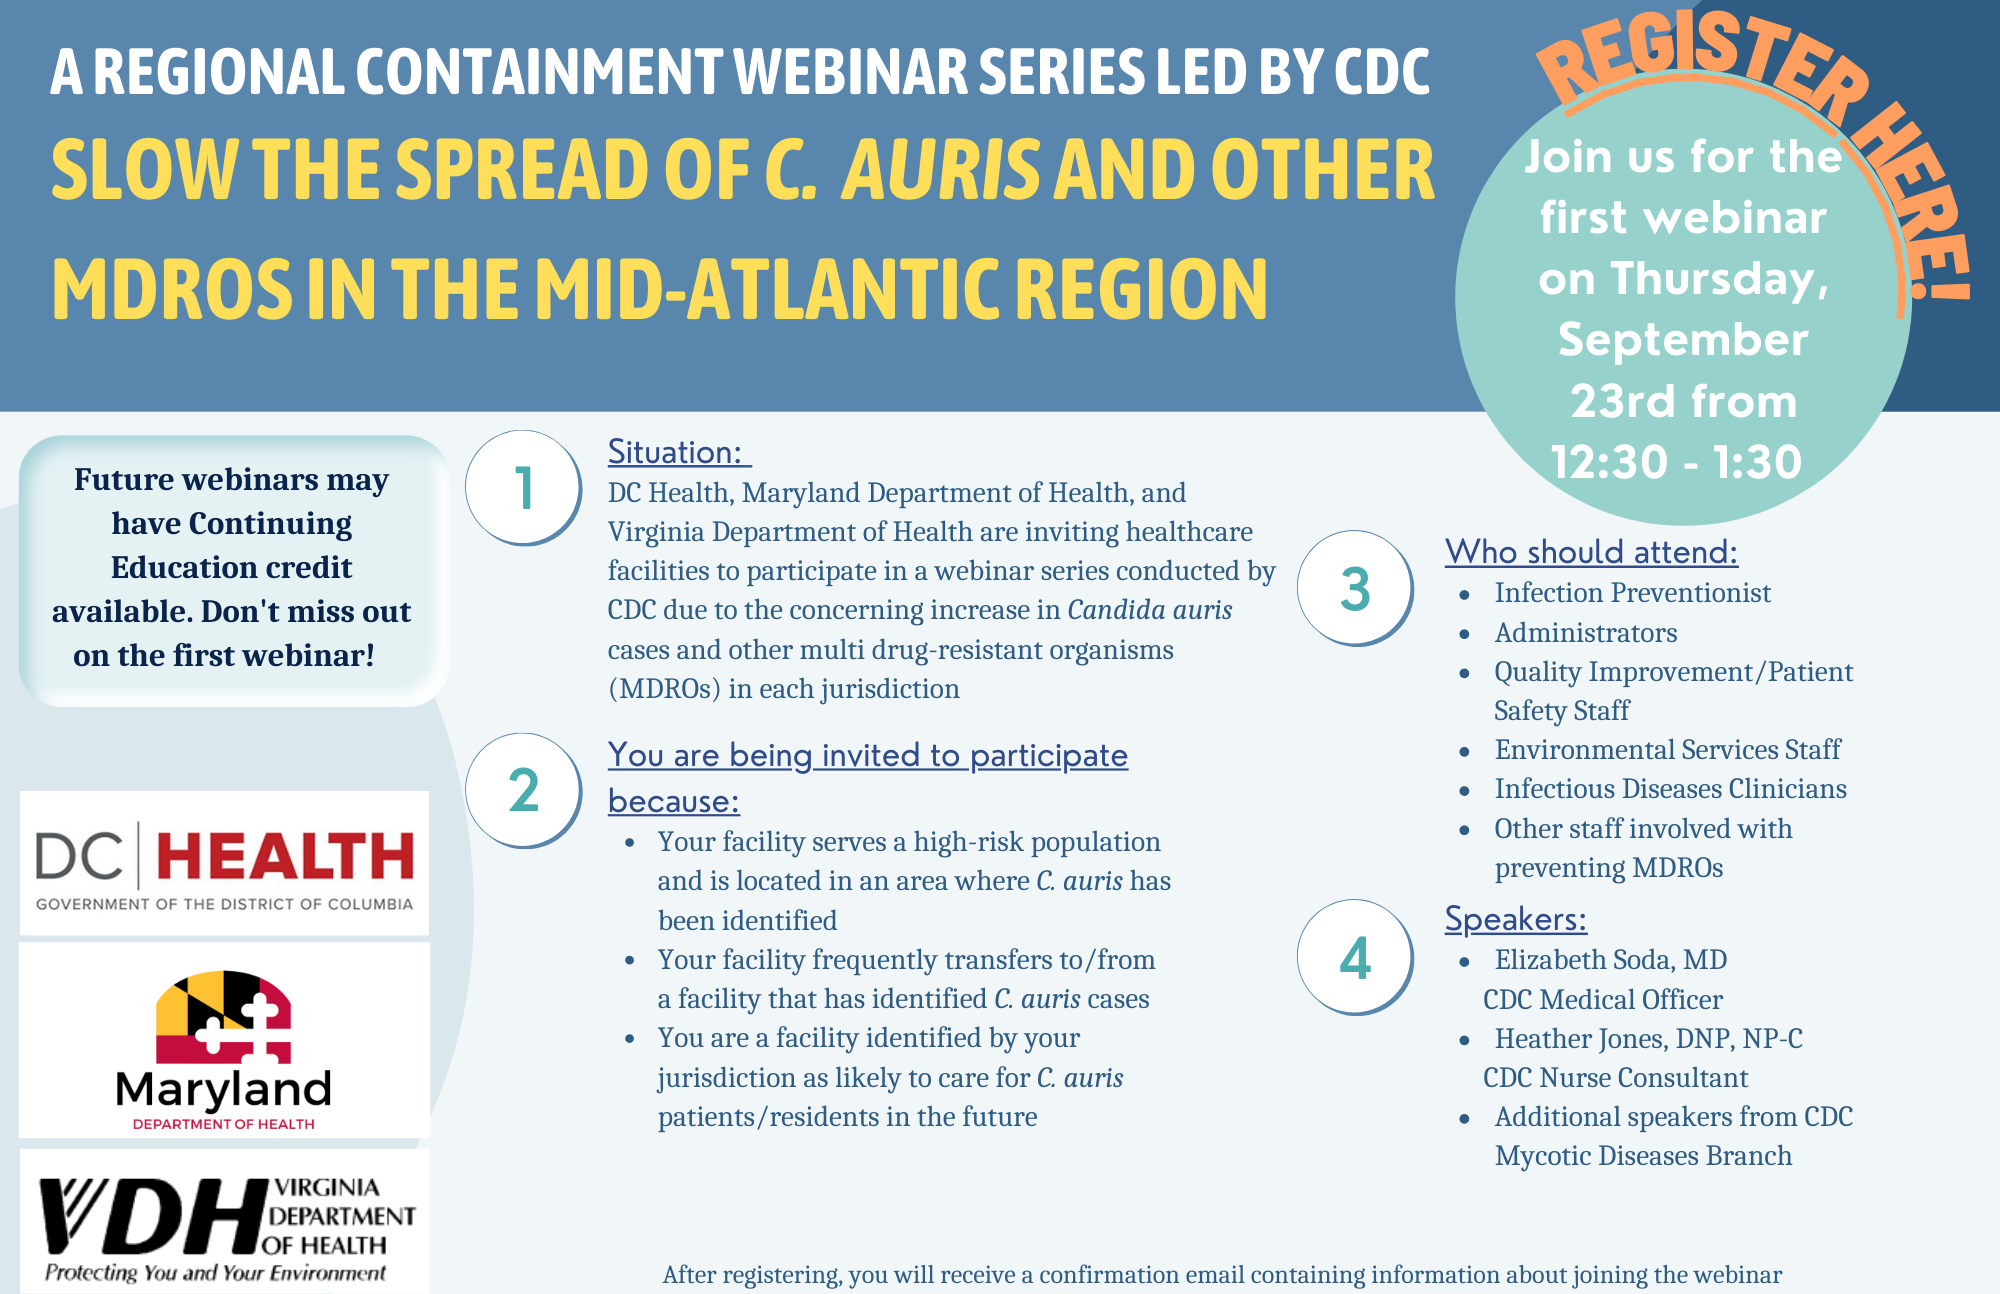 CDC Regional Containment Webinar Series